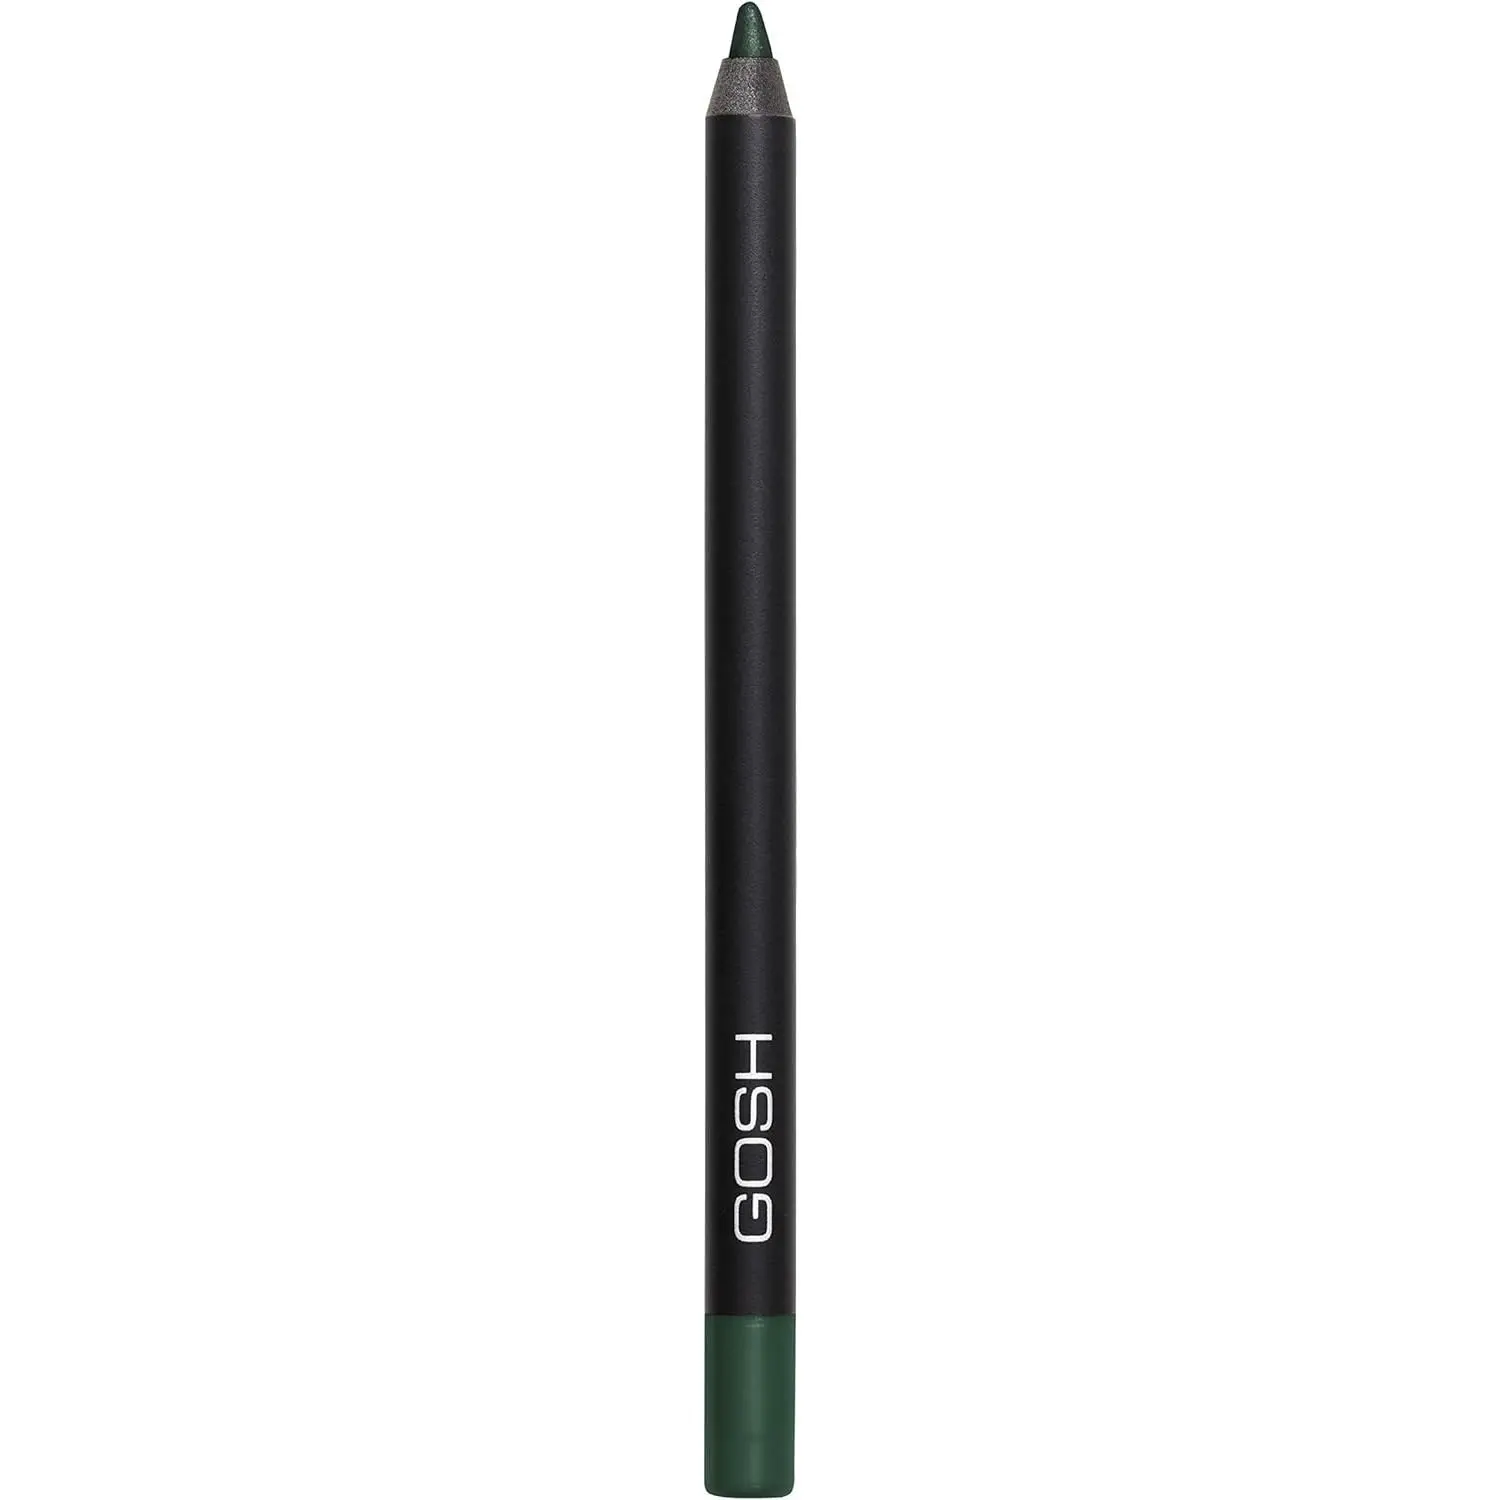 Карандаш для глаз Gosh Velvet Touch Eye Pencil водостойкий тон 026 (Woody green) 1.2 г - фото 1